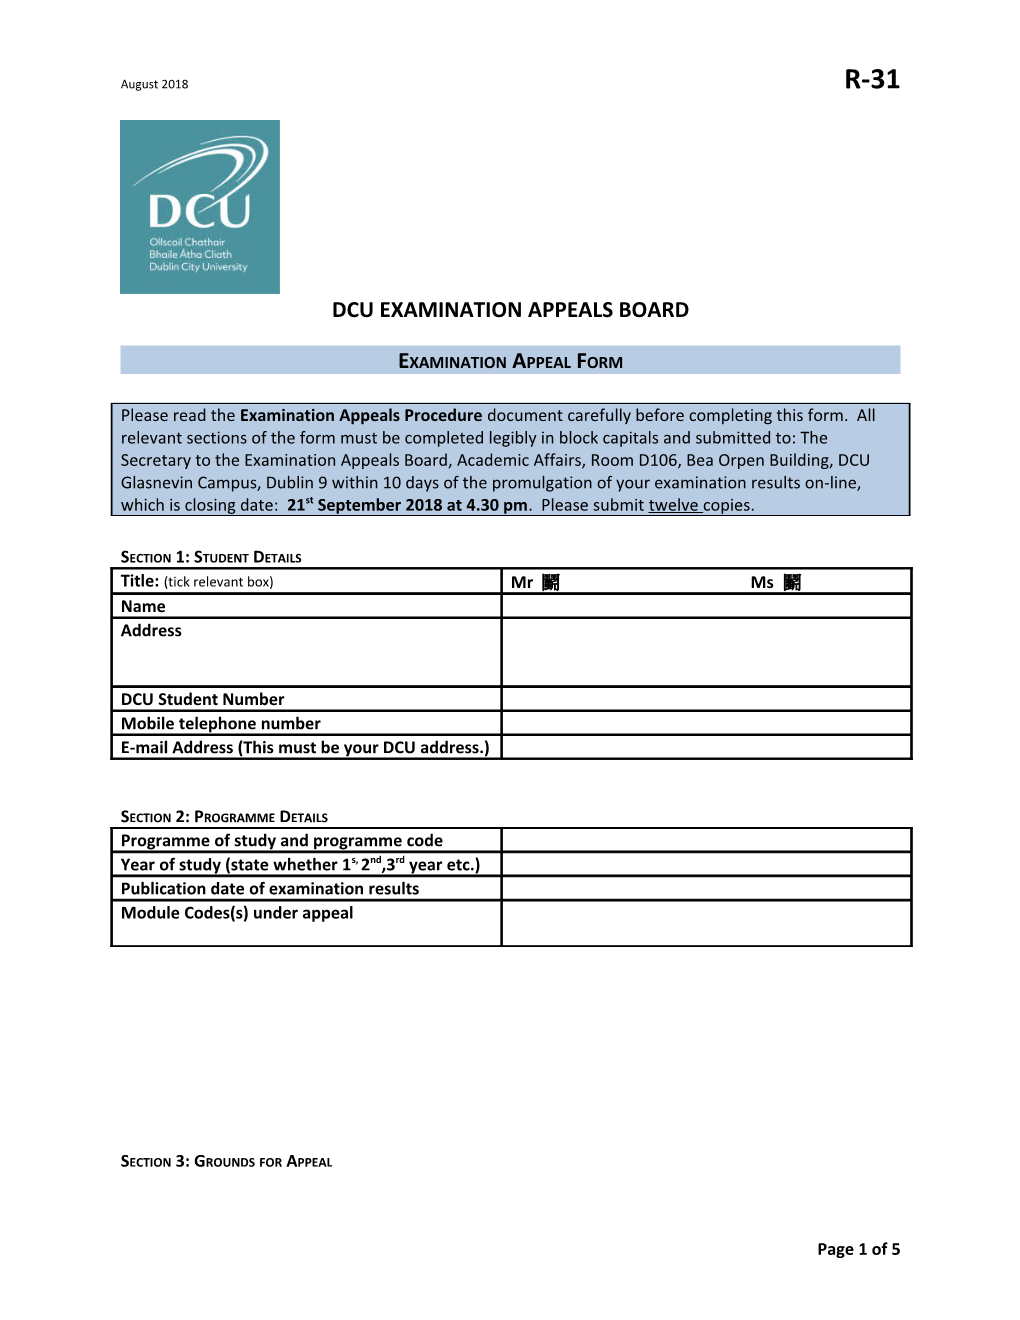 DCU Examination Appeals Board